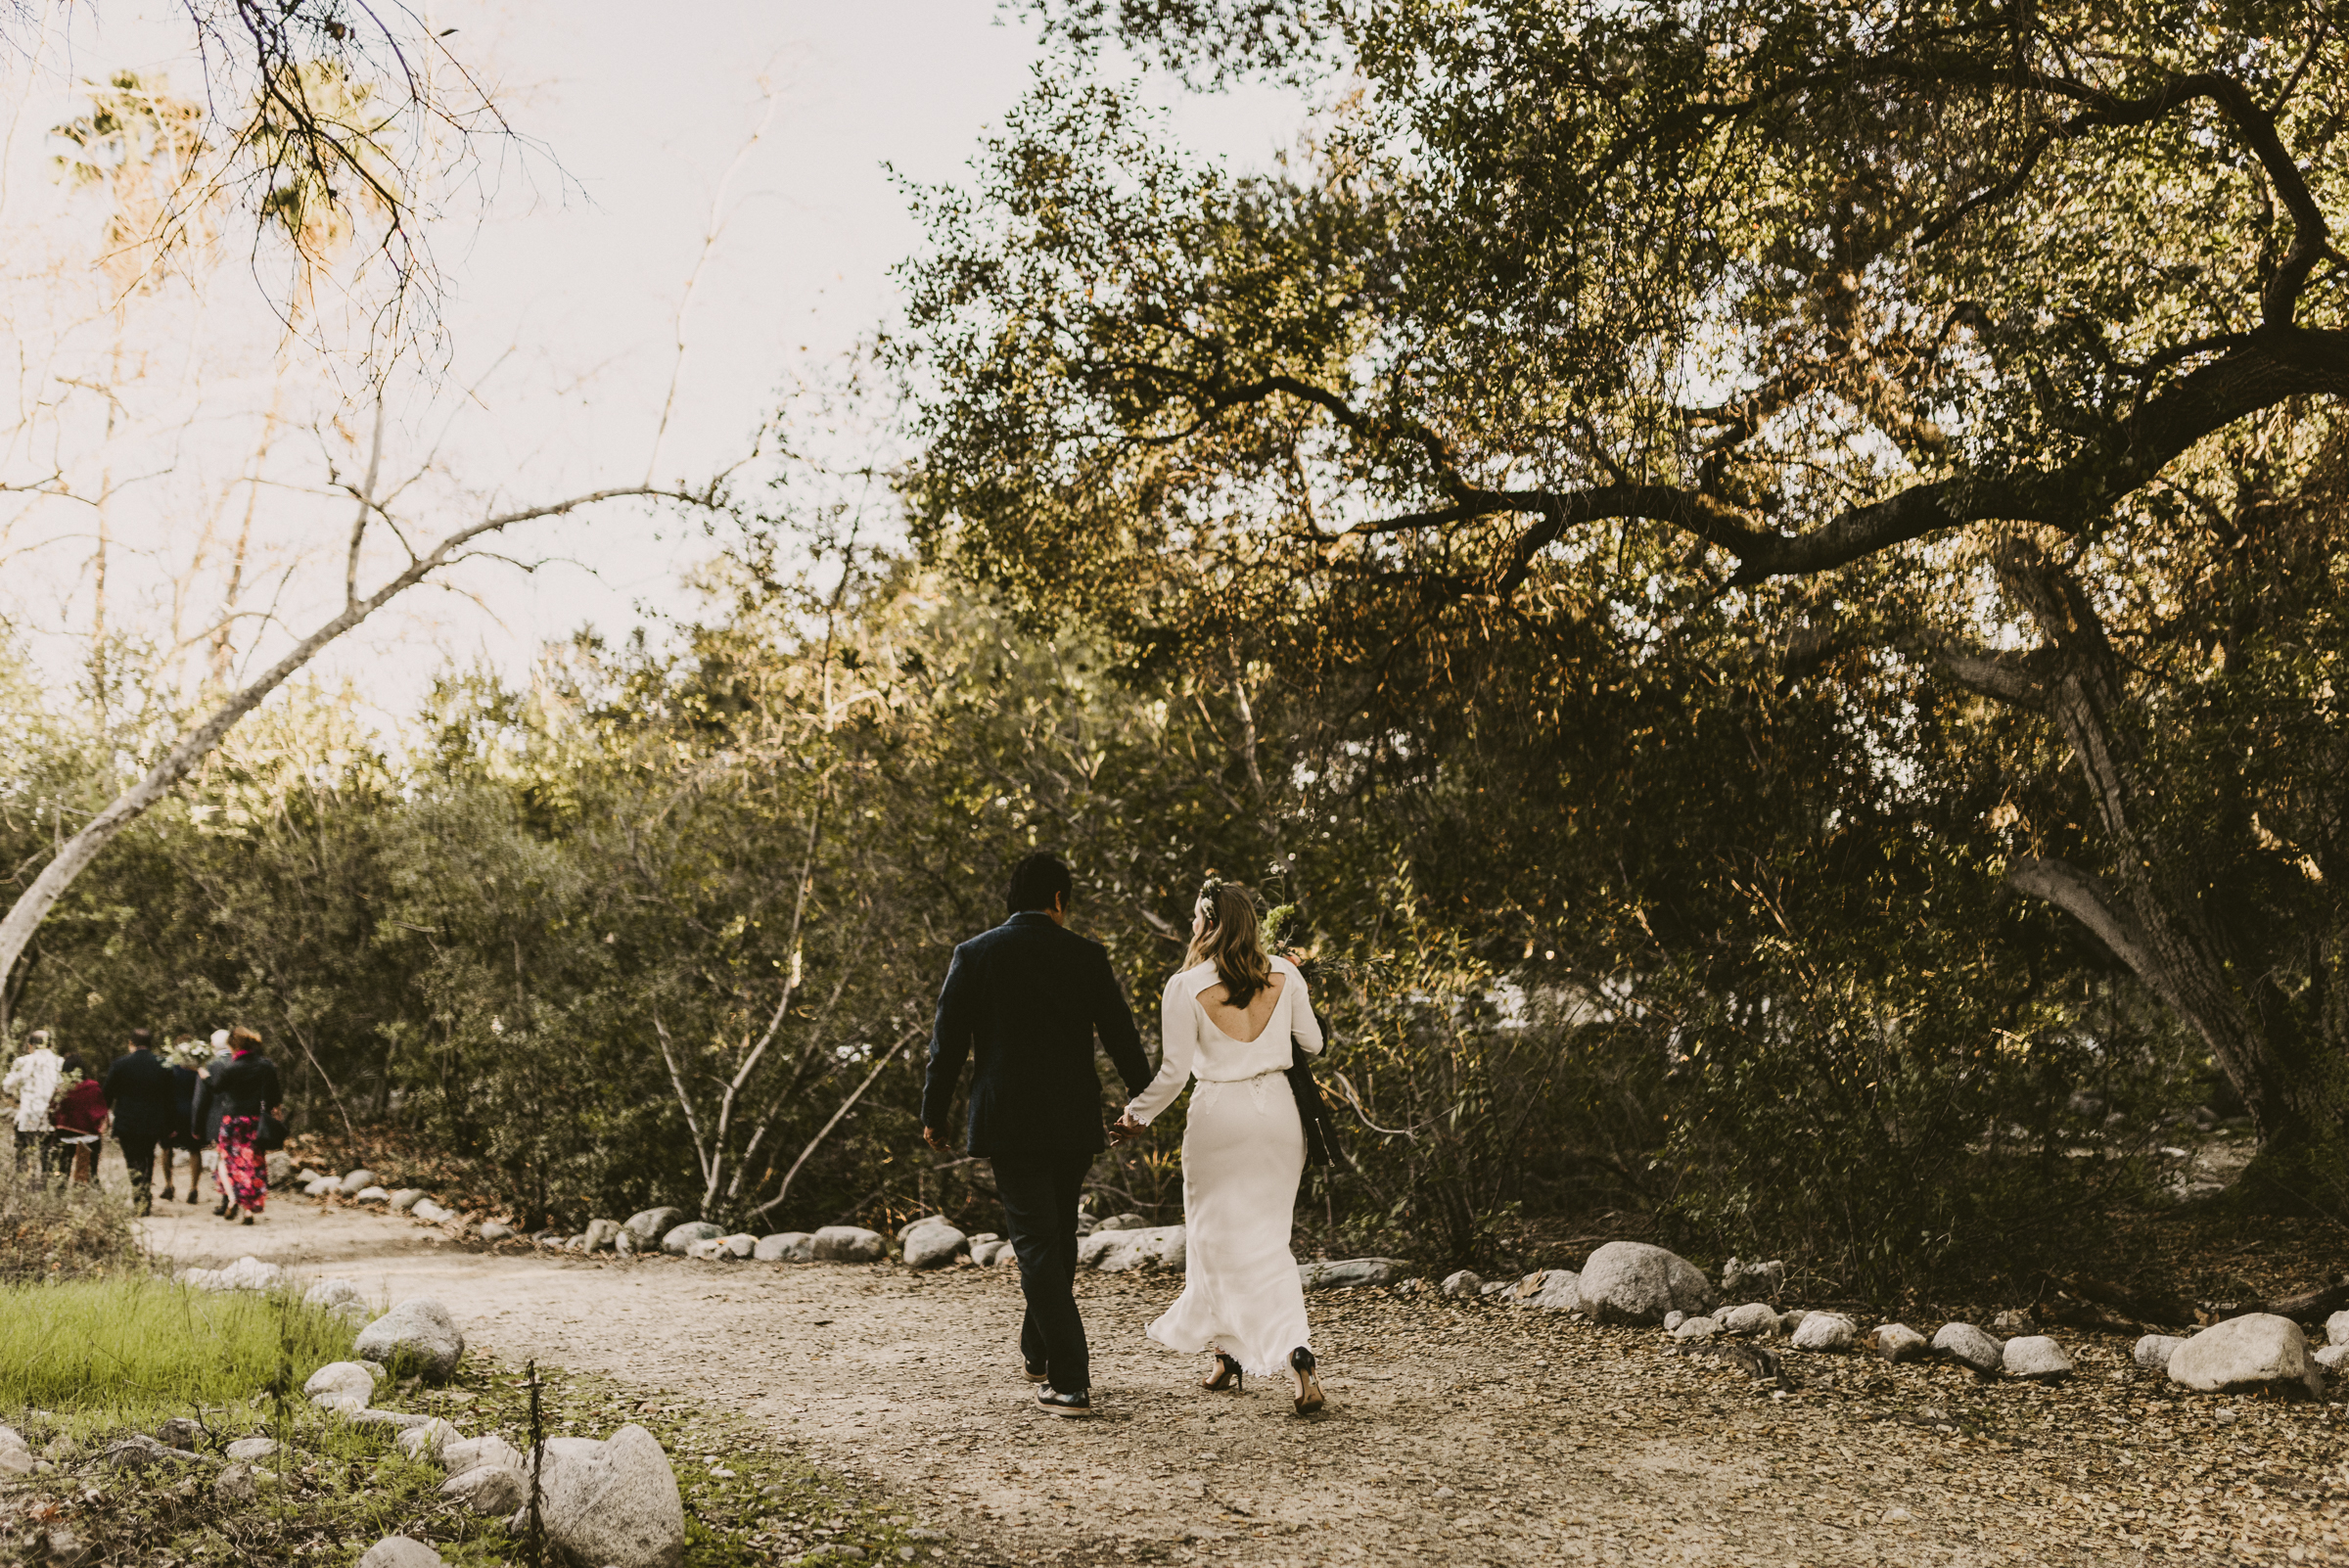 ©Isaiah + Taylor Photography - Intimate Elopement, Eaton Canyon, Los Angeles Wedding Photographer-57.jpg